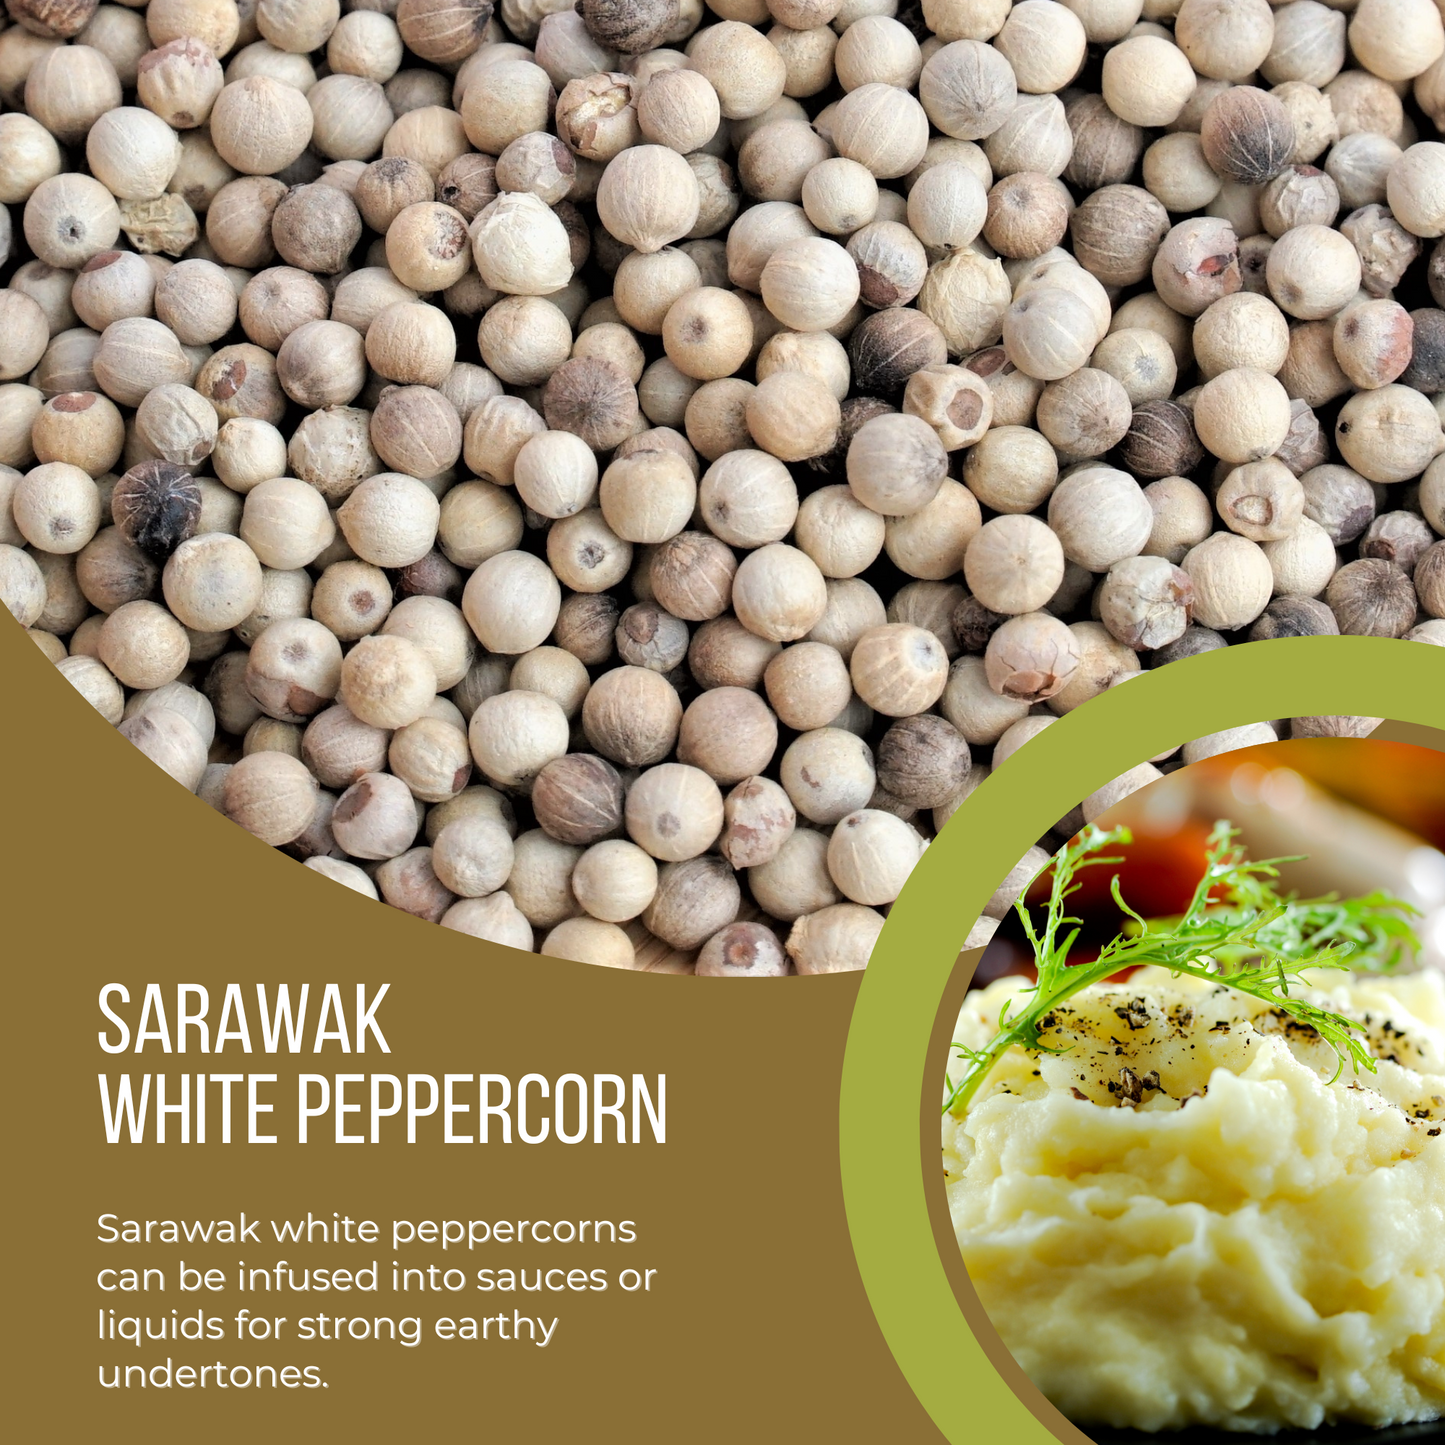 Natharvest Sarawak White Peppercorn with Grinder, 5.6 oz (160 gm)